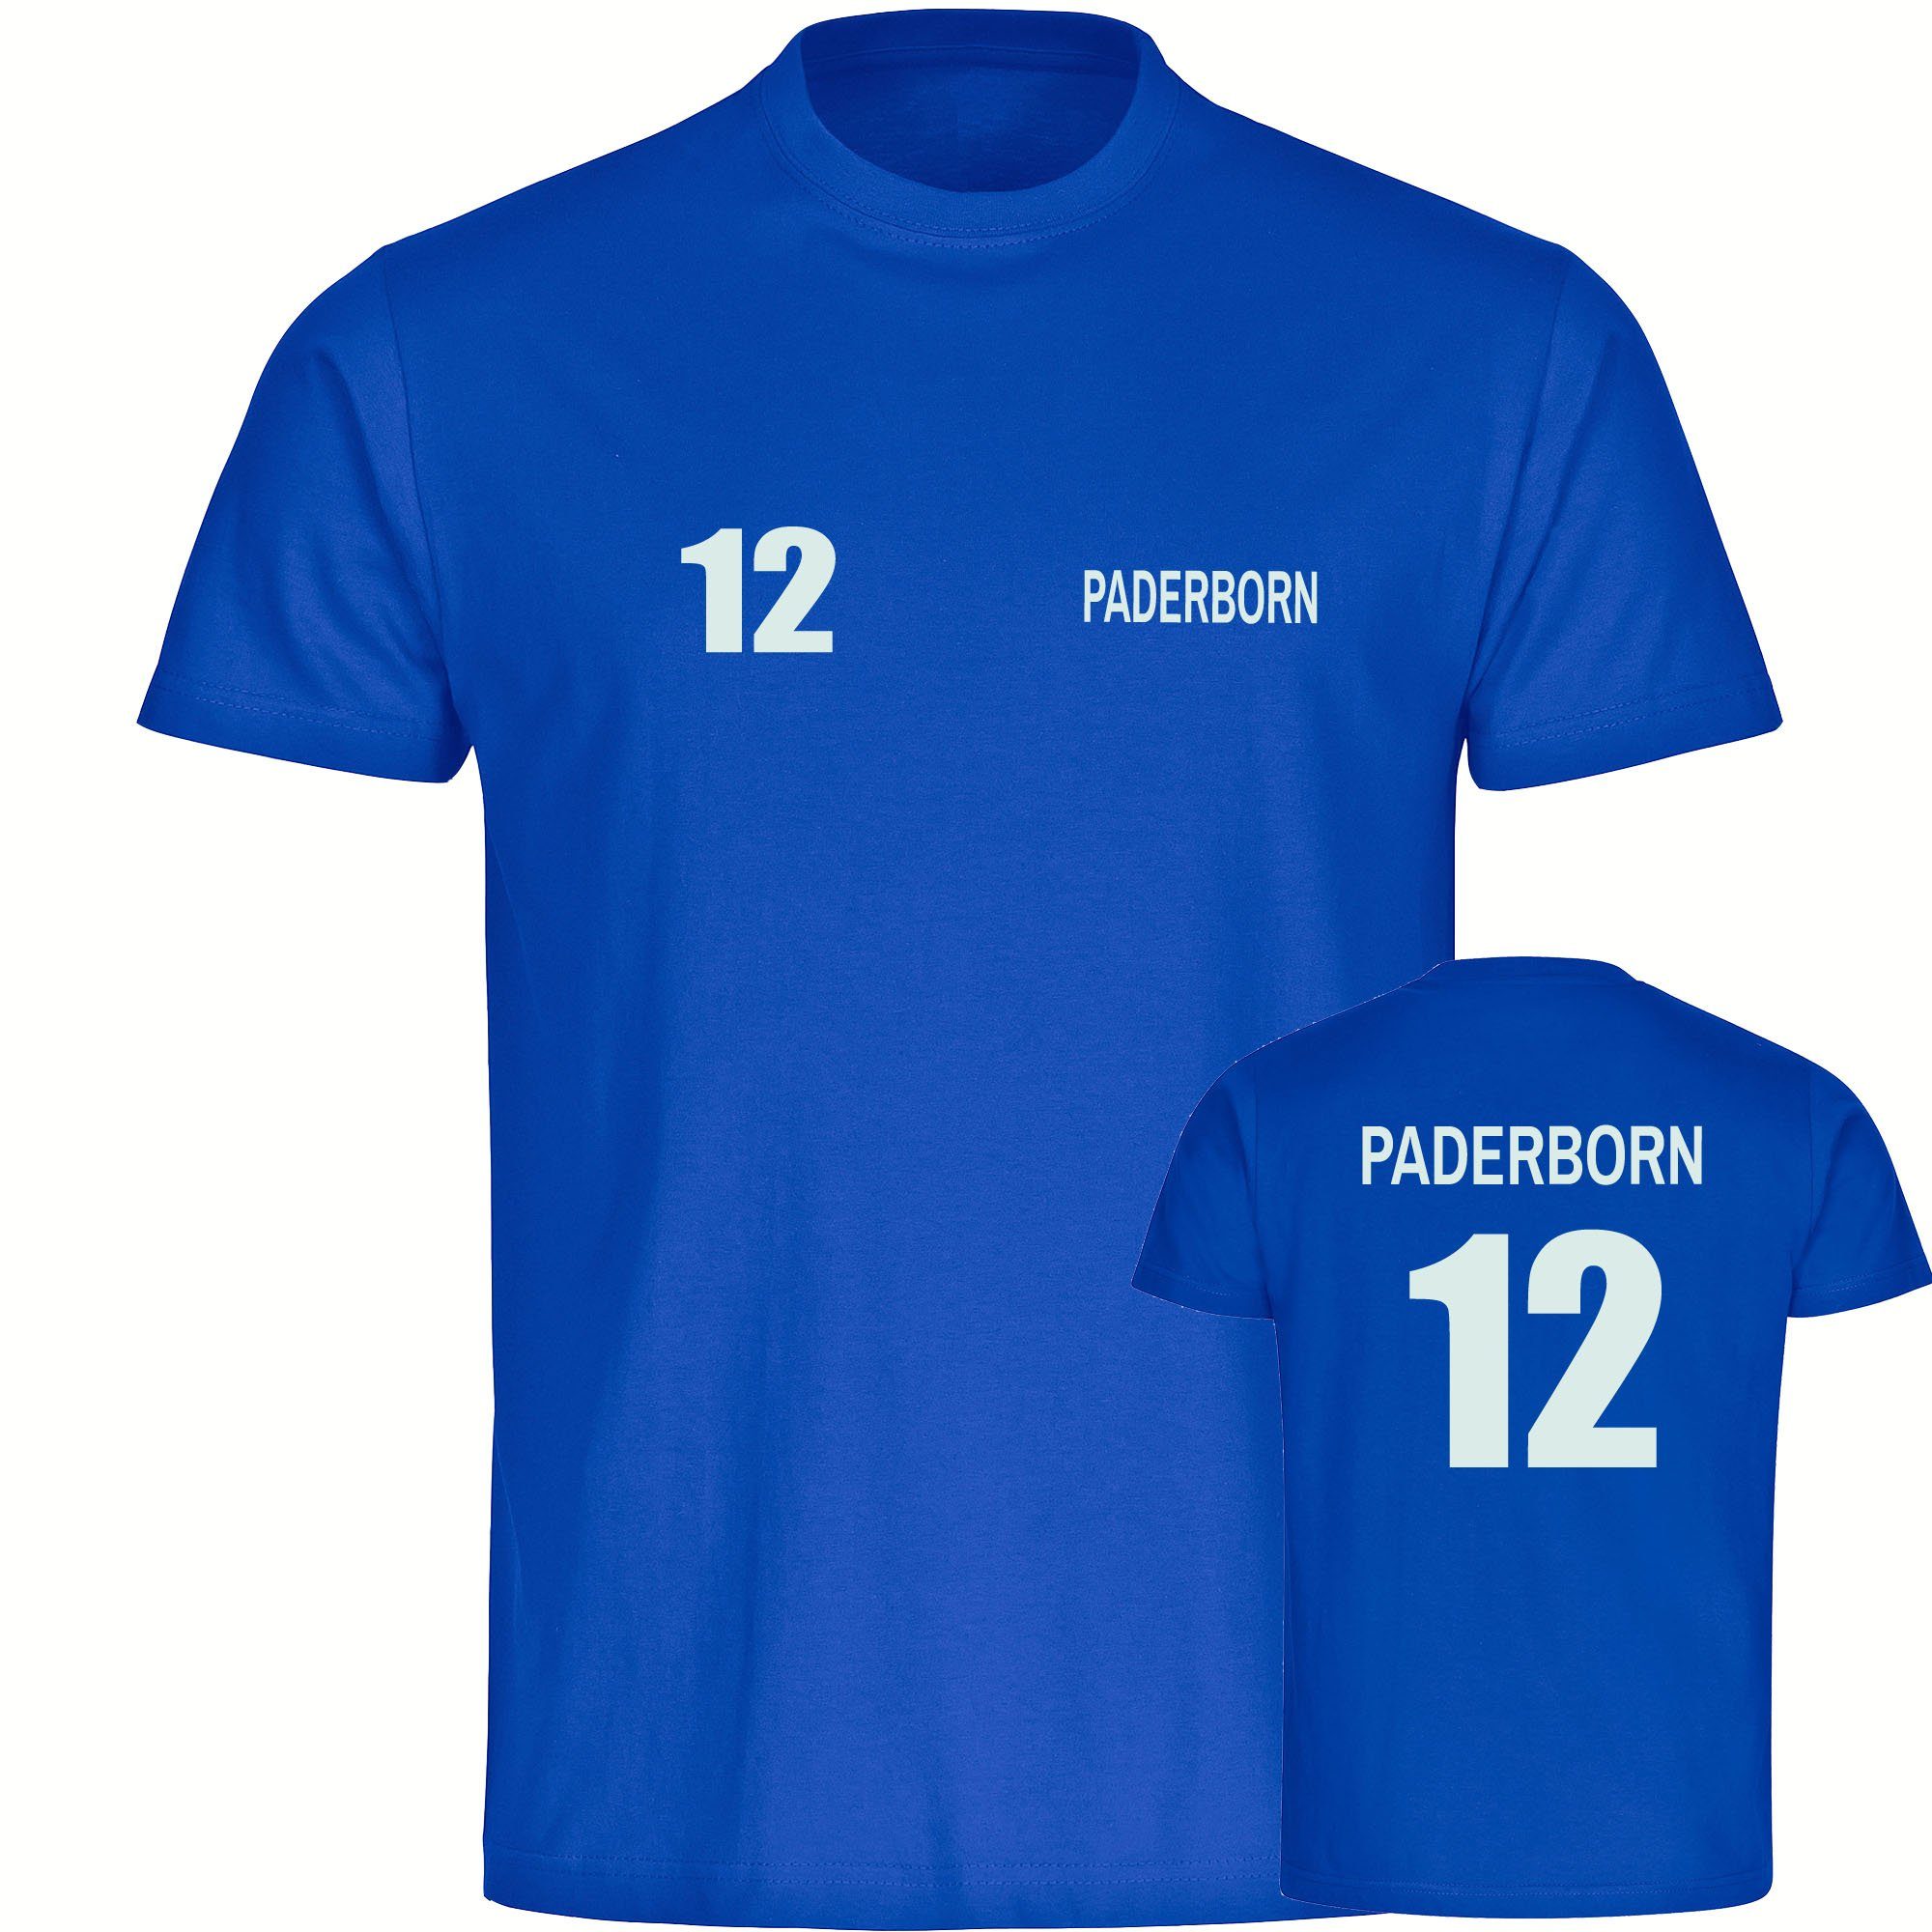 multifanshop T-Shirt Kinder Paderborn - Trikot 12 - Boy Girl